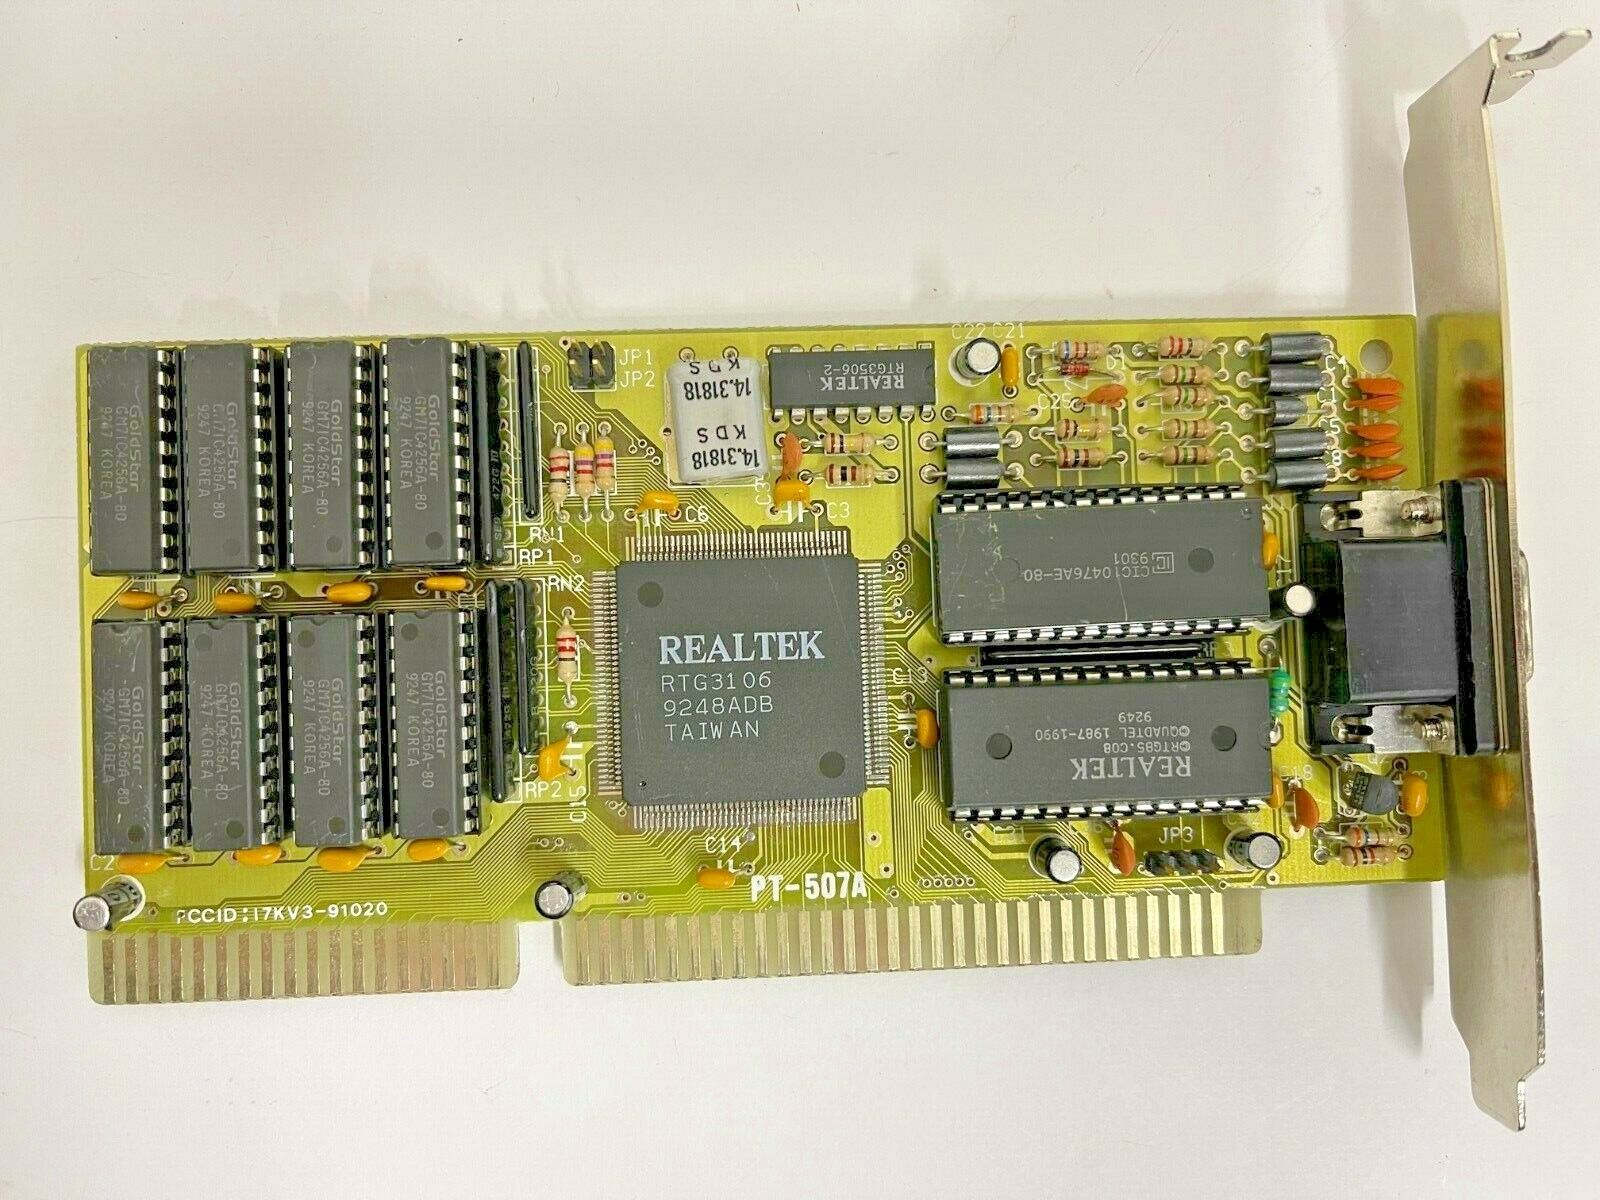 VINTAGE 1992 REALTEK PT-507A RTG3106 1 MEG ISA VGA CARD FCC I7KV3-91020 MXB34